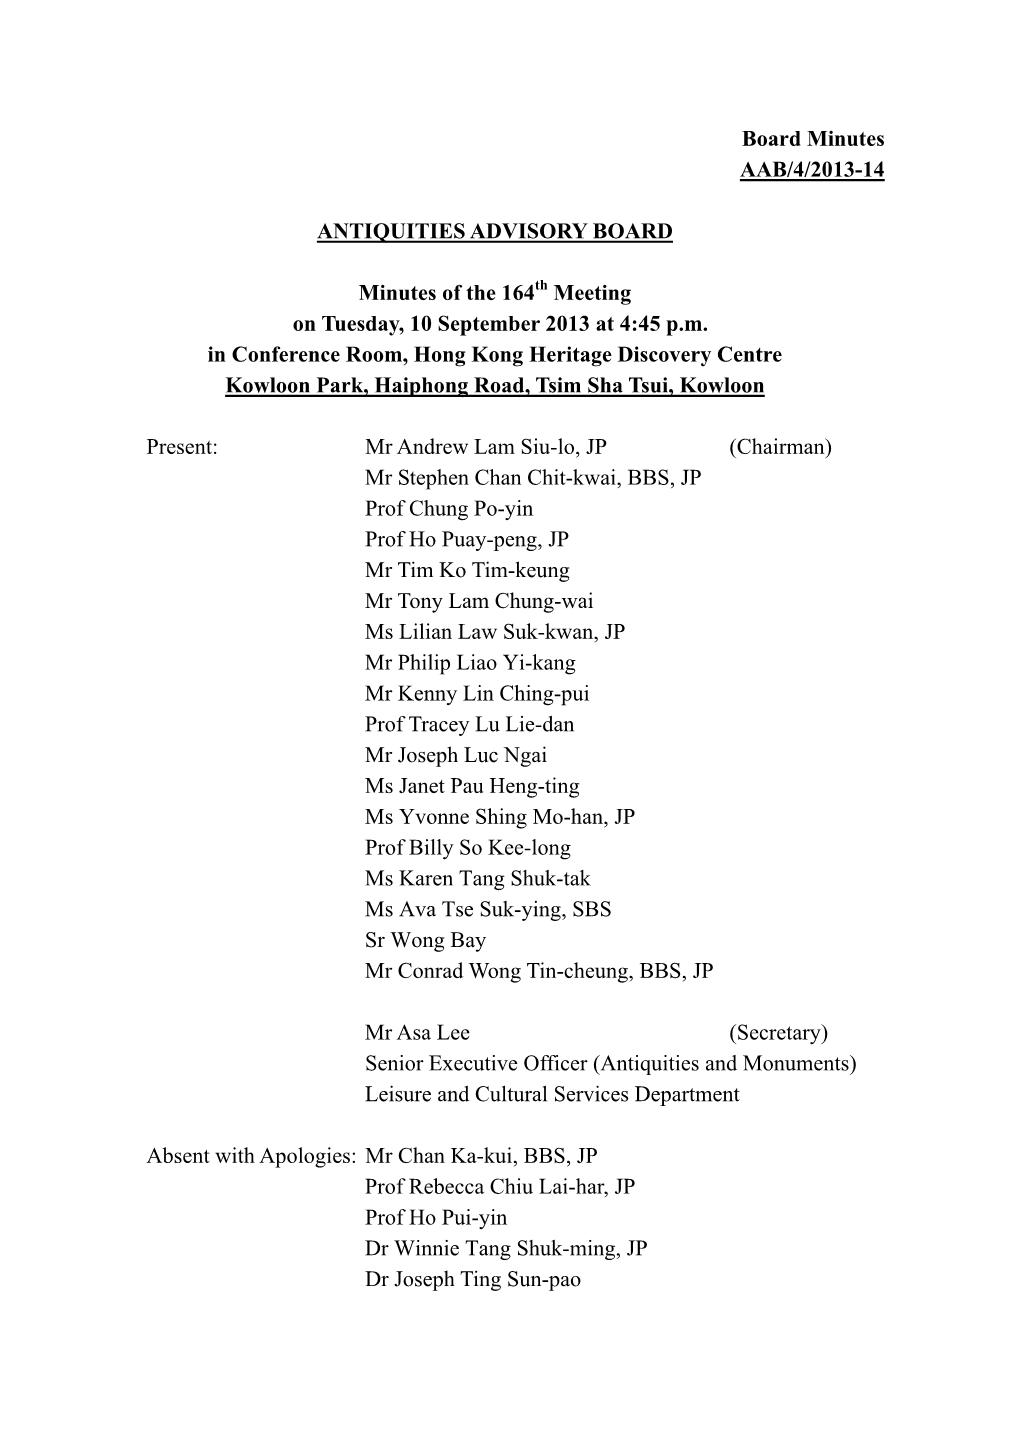 Board Minutes AAB/4/2013-14 ANTIQUITIES ADVISORY BOARD